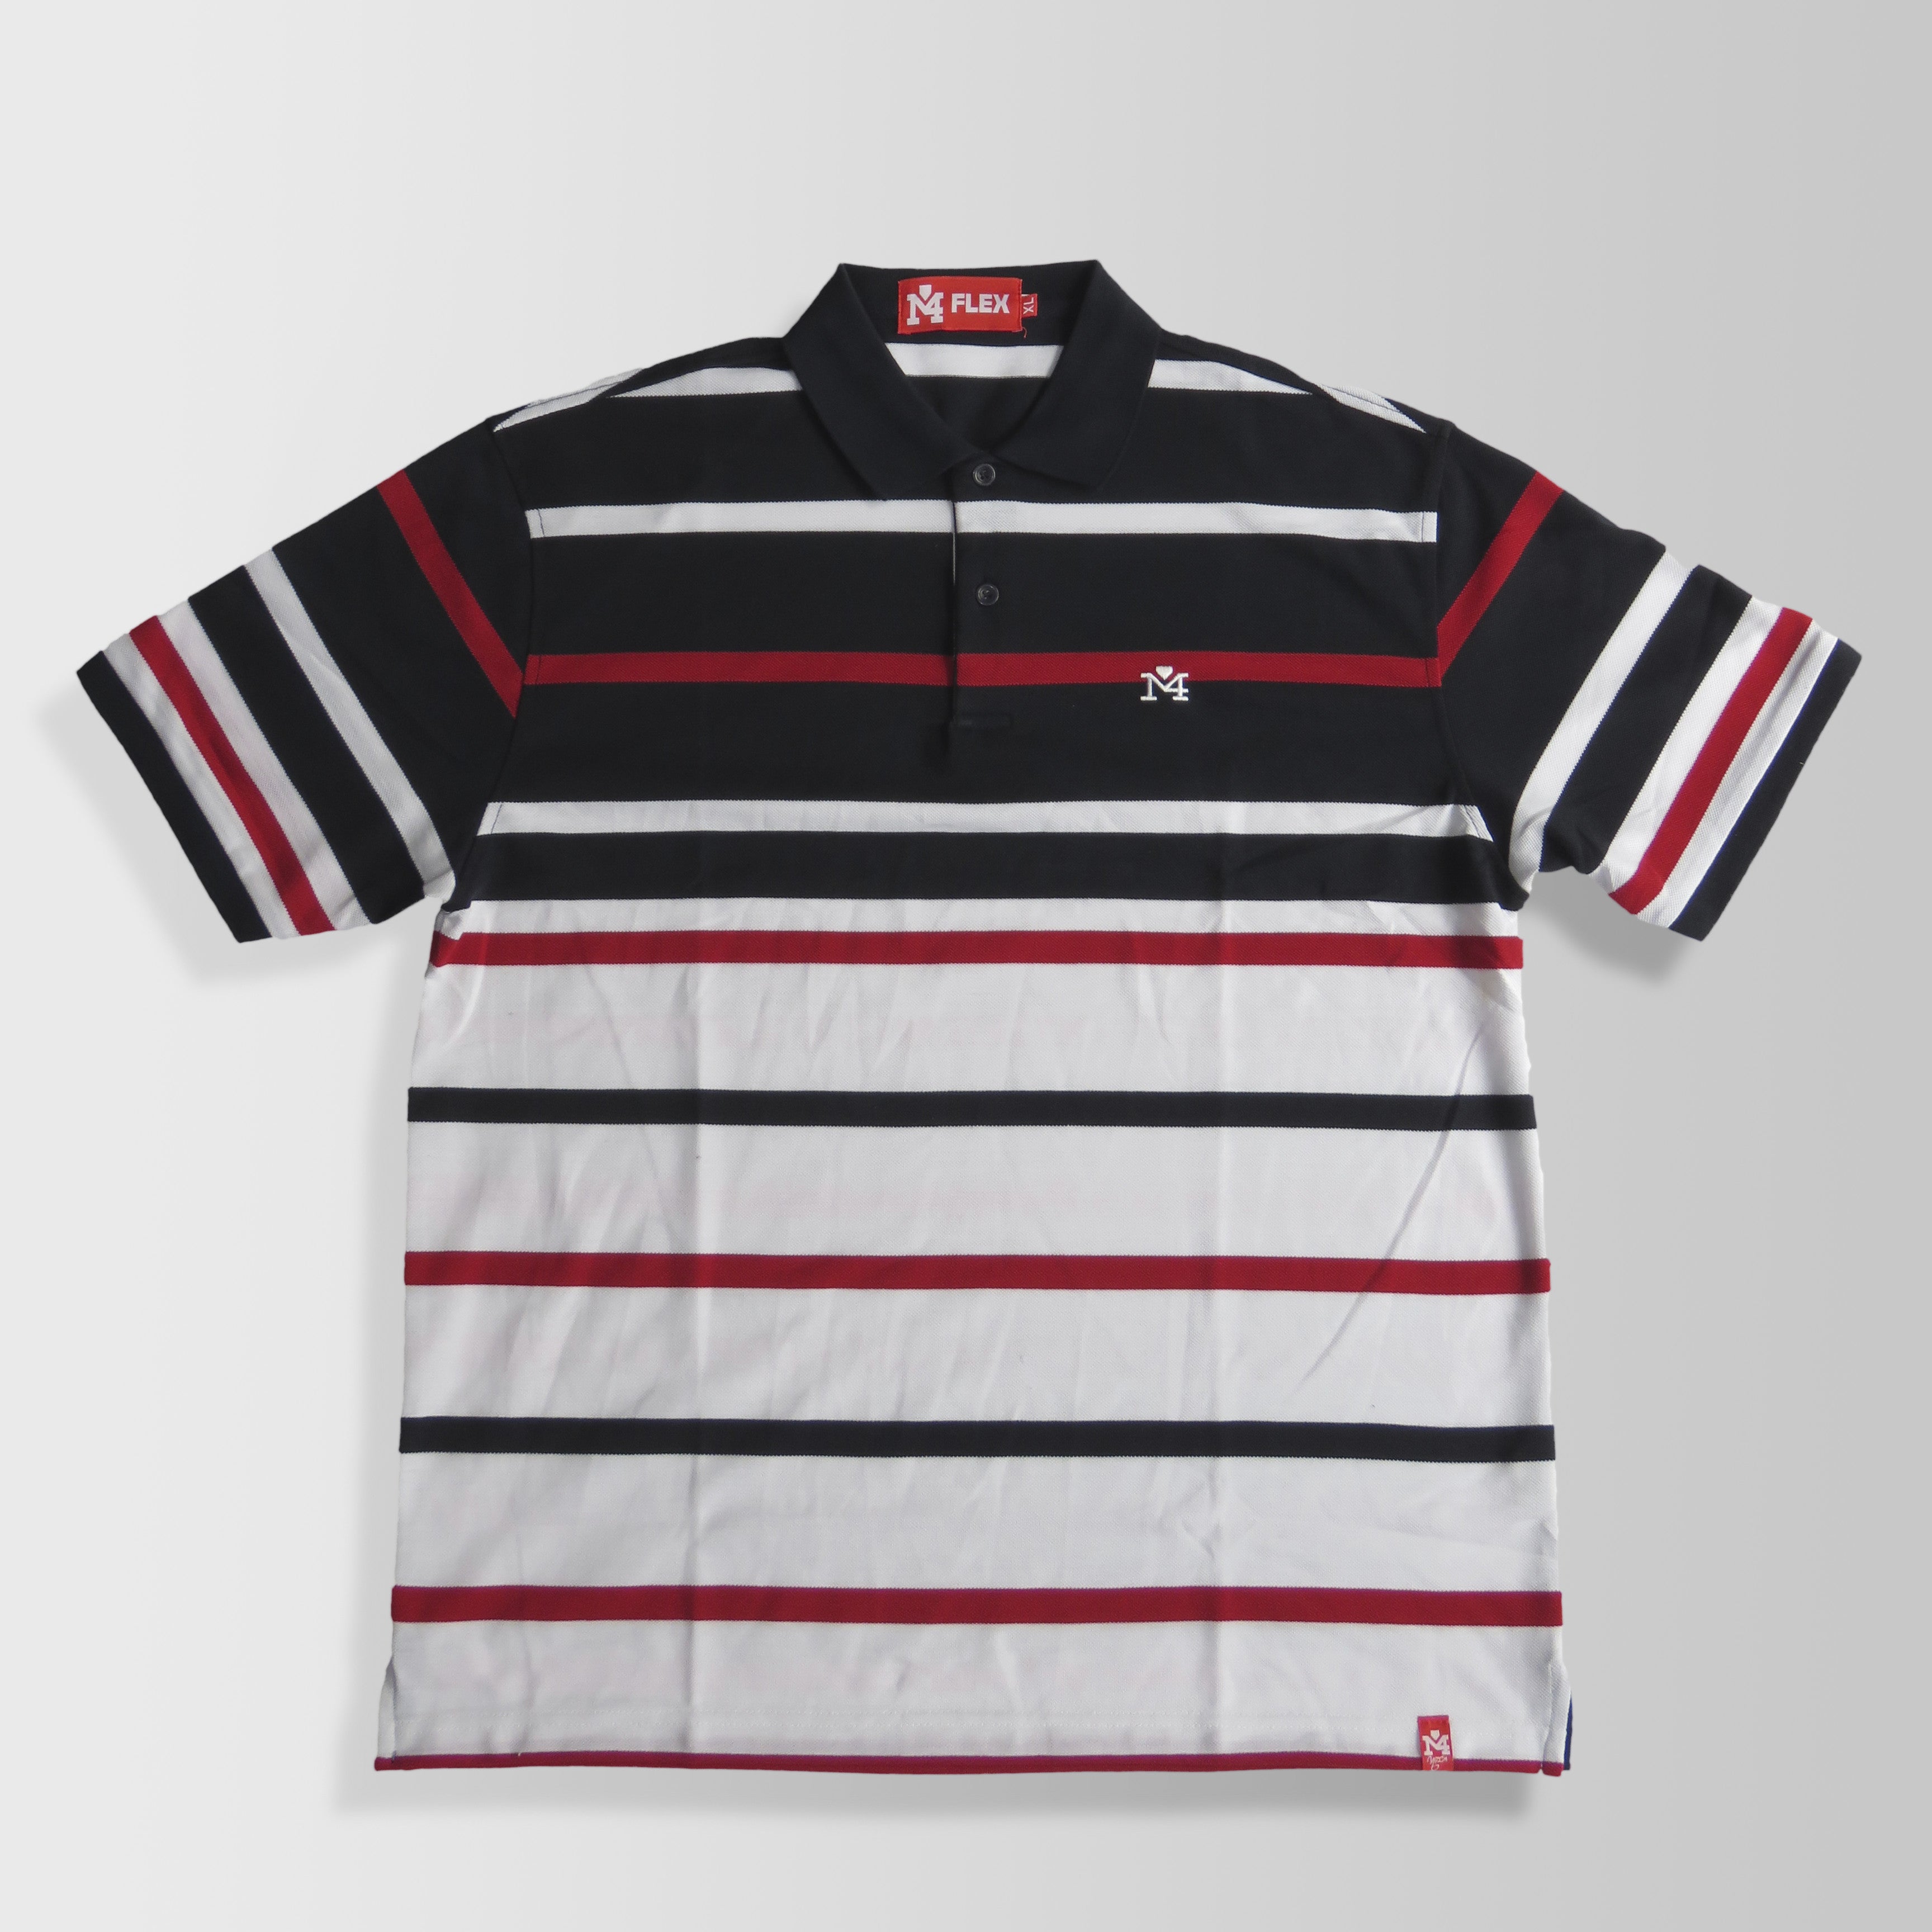 mens black and white striped polo shirt